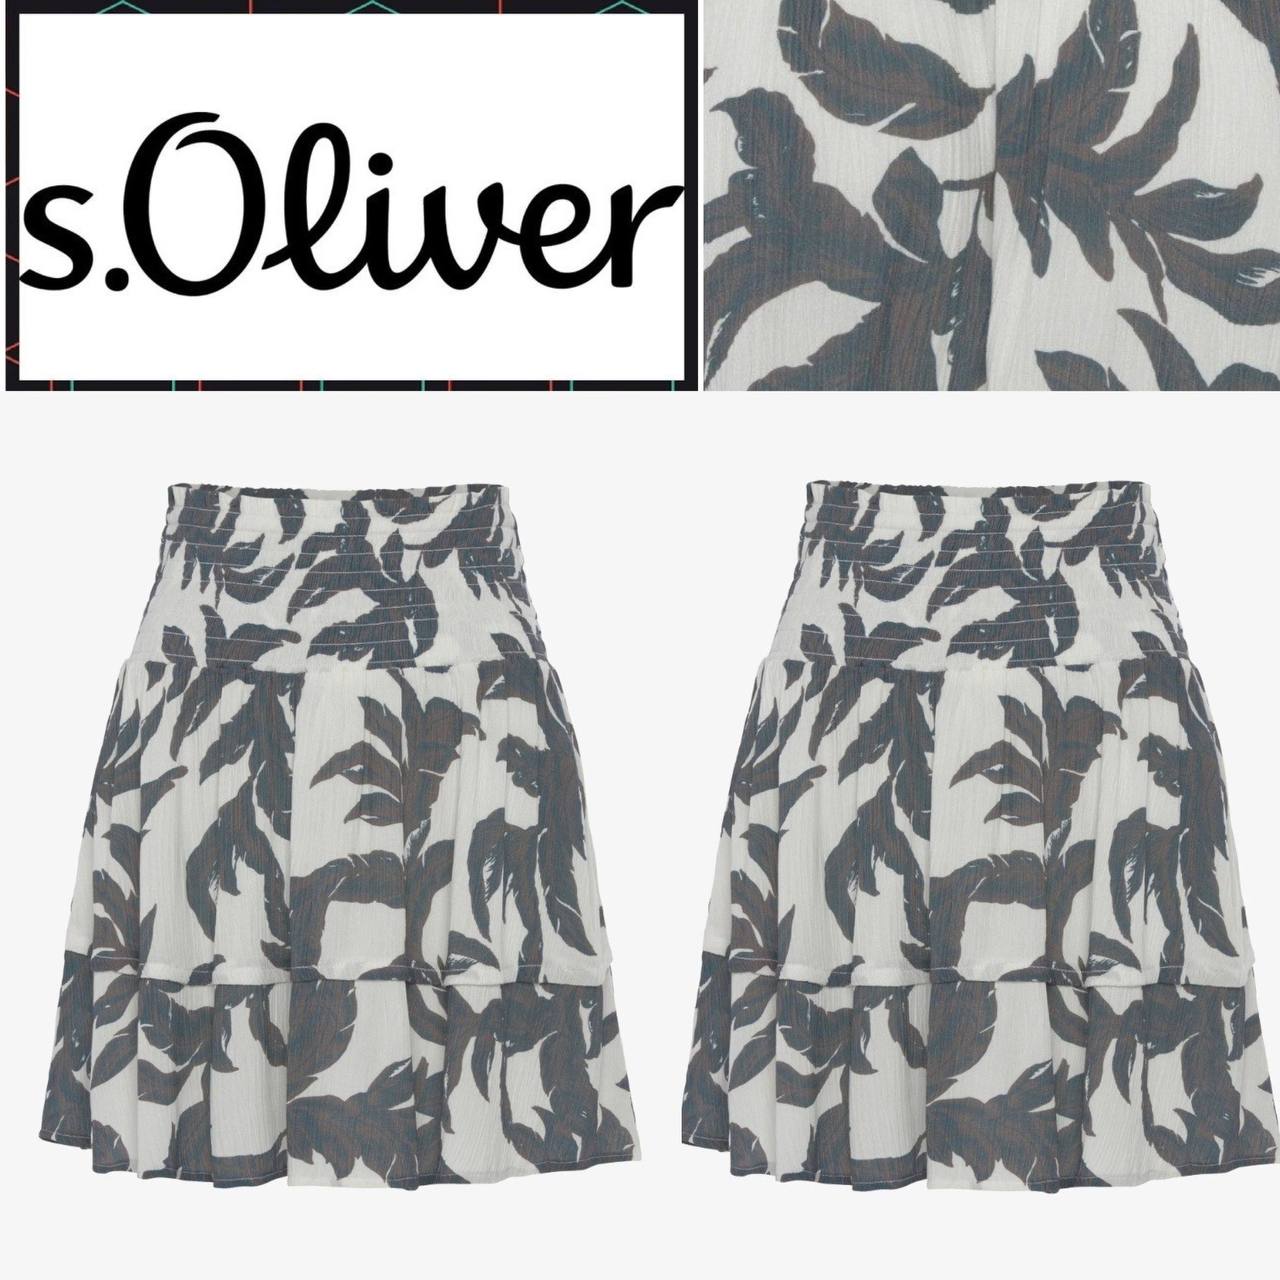 Summer skirt by S.Oliver